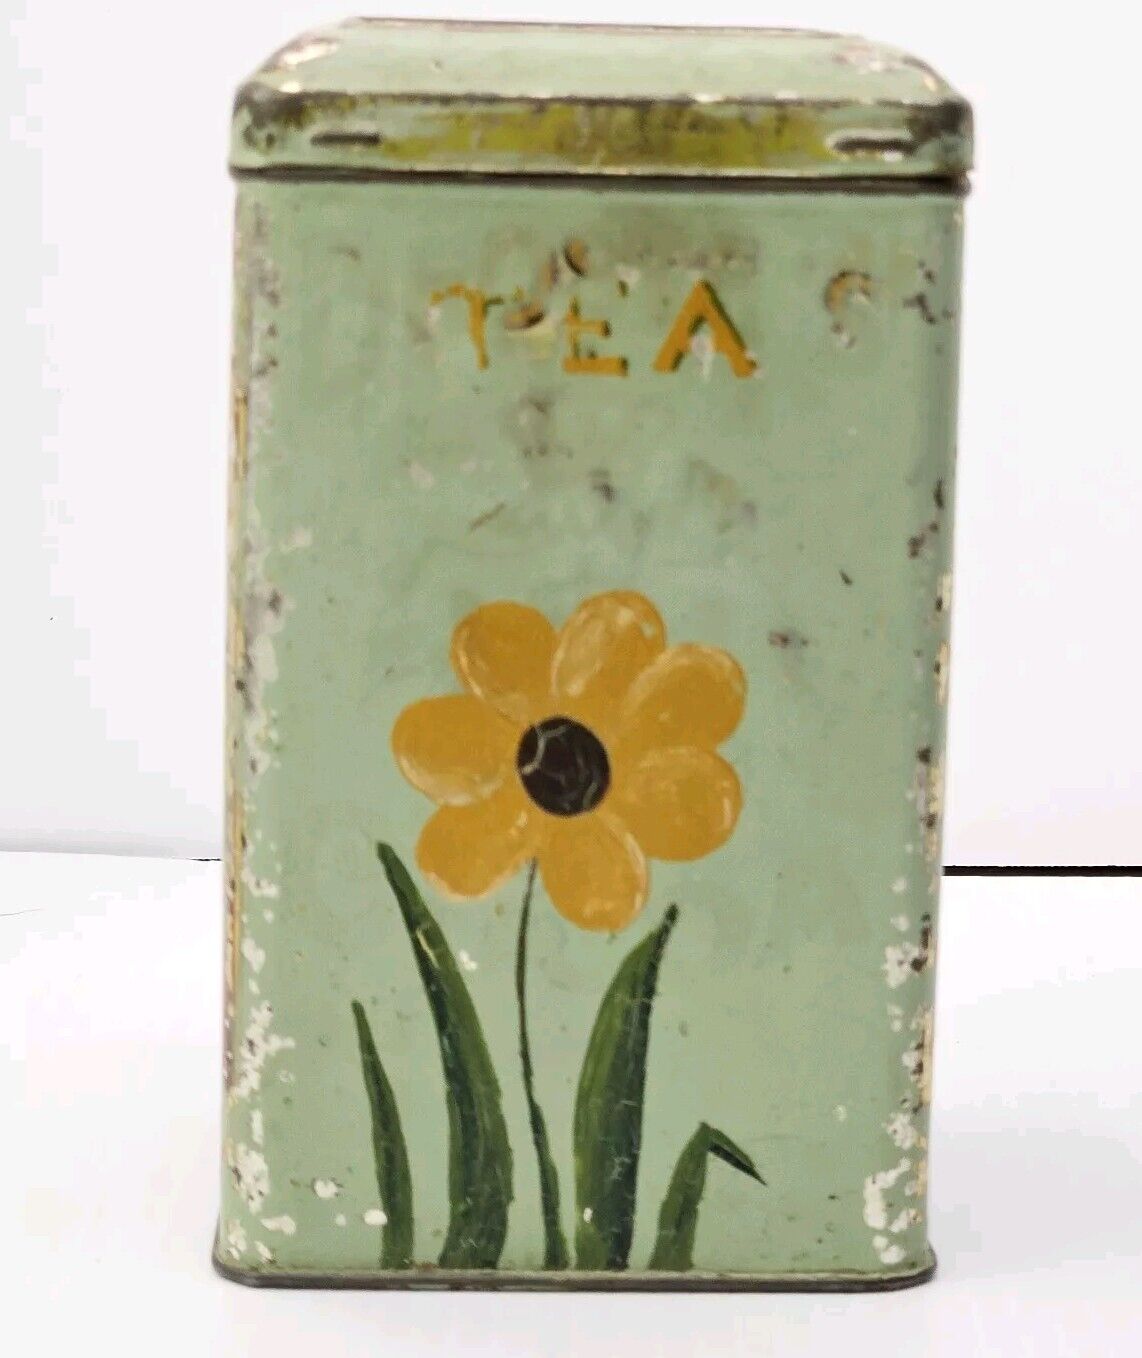 Antique Advertising Tin, Droste’s Dutch Cocoa, 8 Oz.  Primitive Tea Cannister